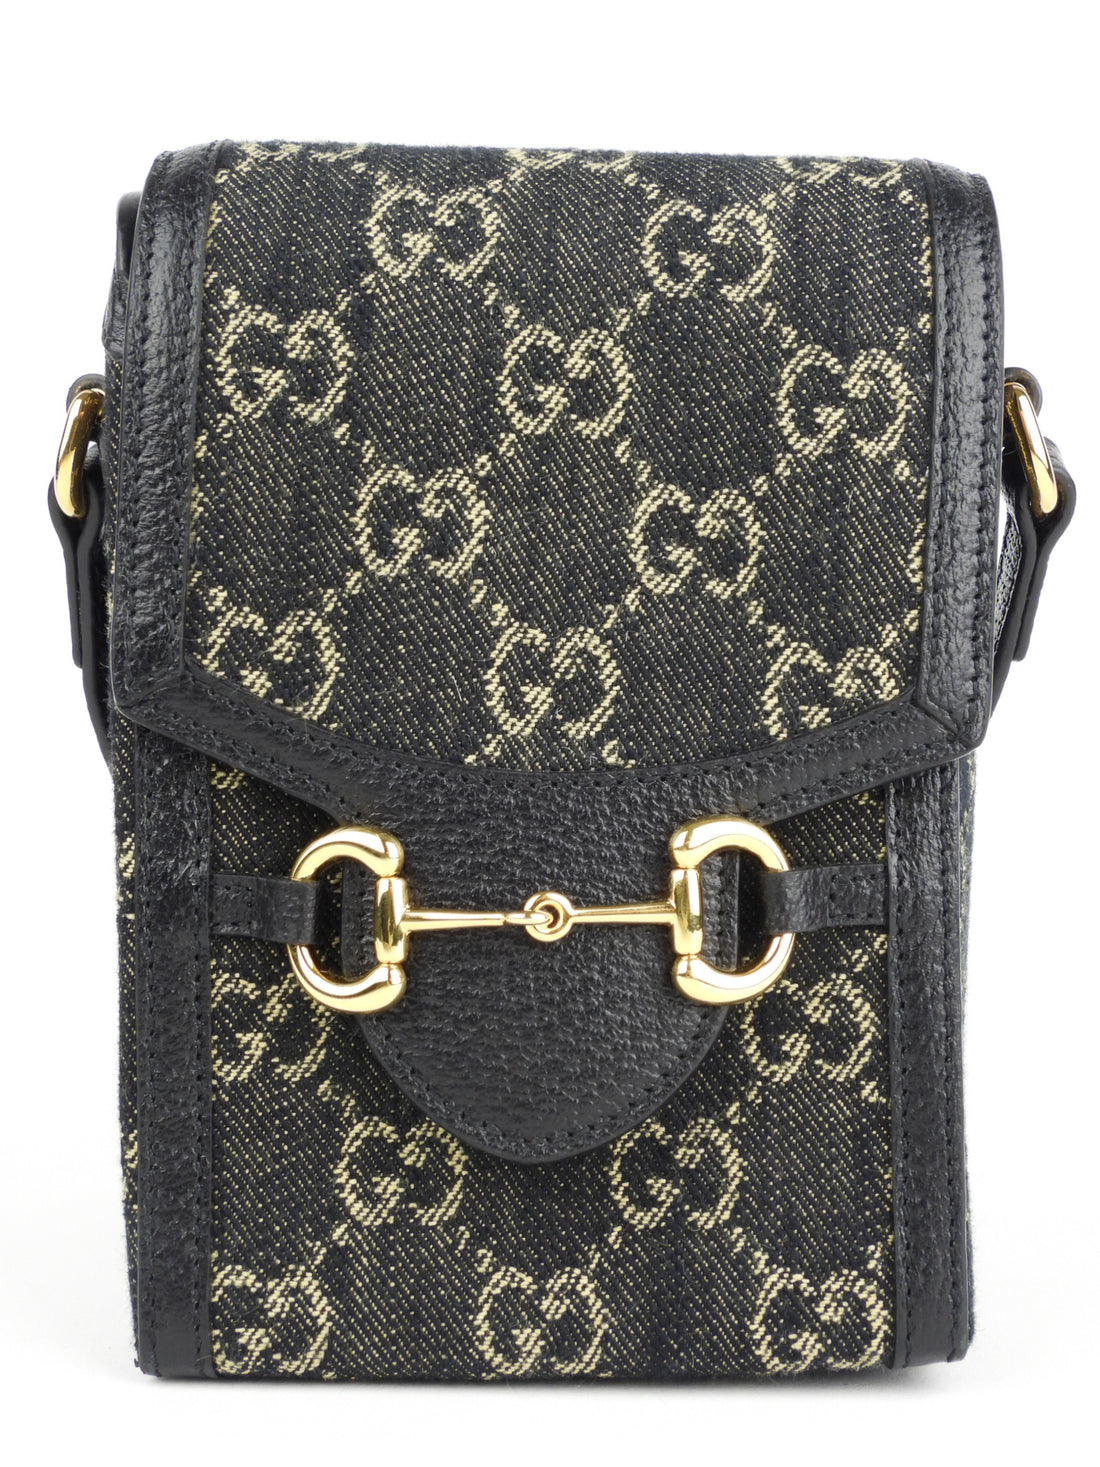 Gucci Horsebit 1955 mini bag in black leather